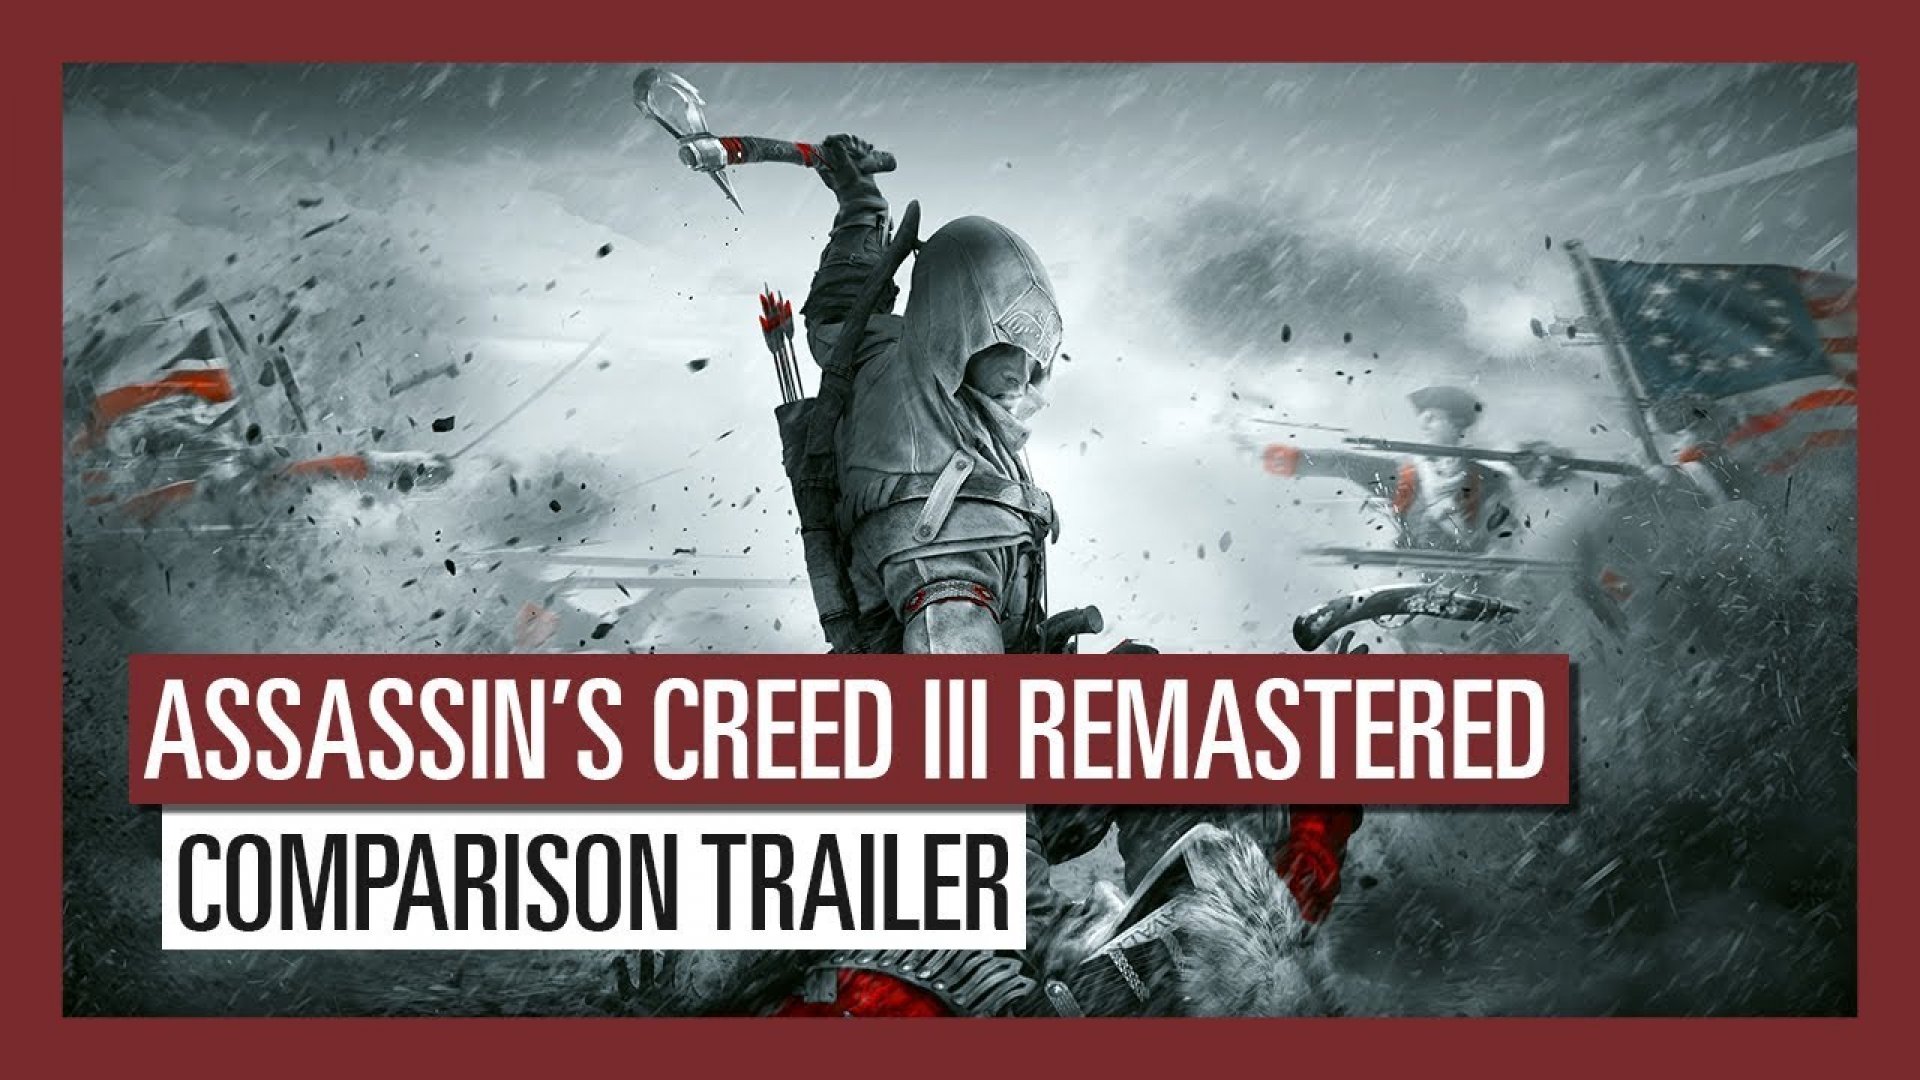 Assassin's Creed 3 Remastered. 2019 - Assassin's Creed 3 Remastered - обложка. Assassins Creed 3 отличия ремастера. Компарисон. Обновление ассасин крид